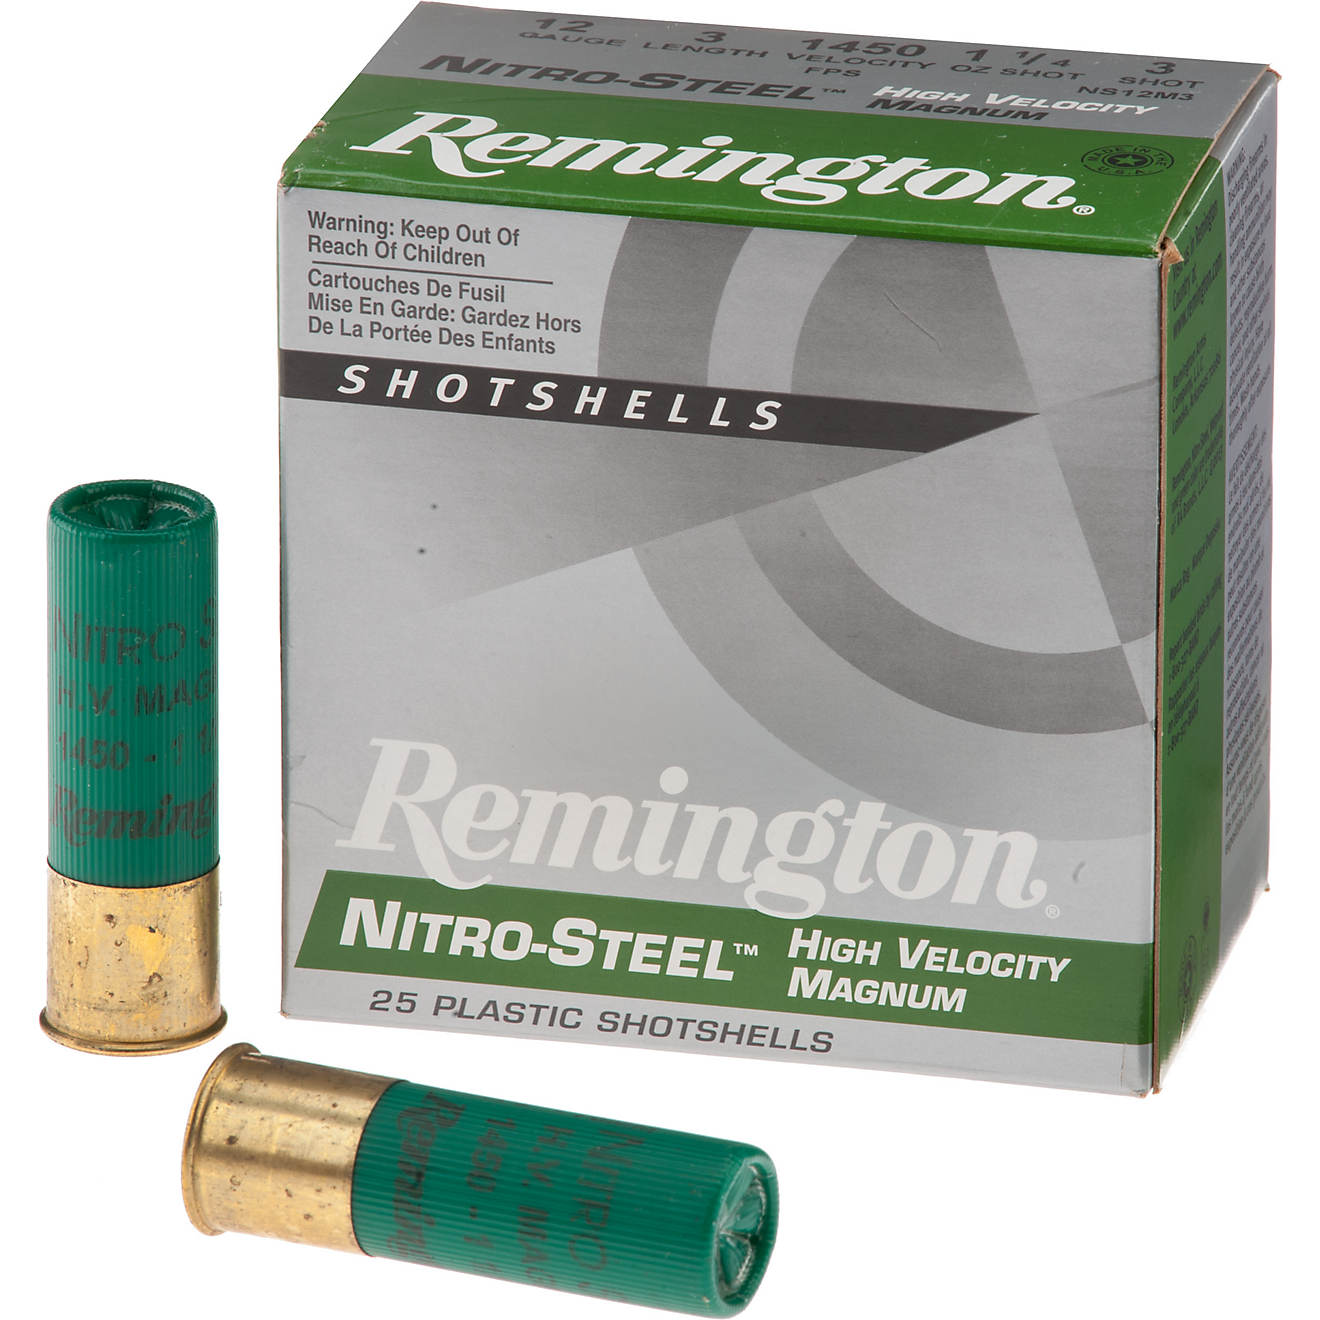 500rds of Remington Nitro-Steel High-Velocity Magnum Load 12 Gauge Shotshells